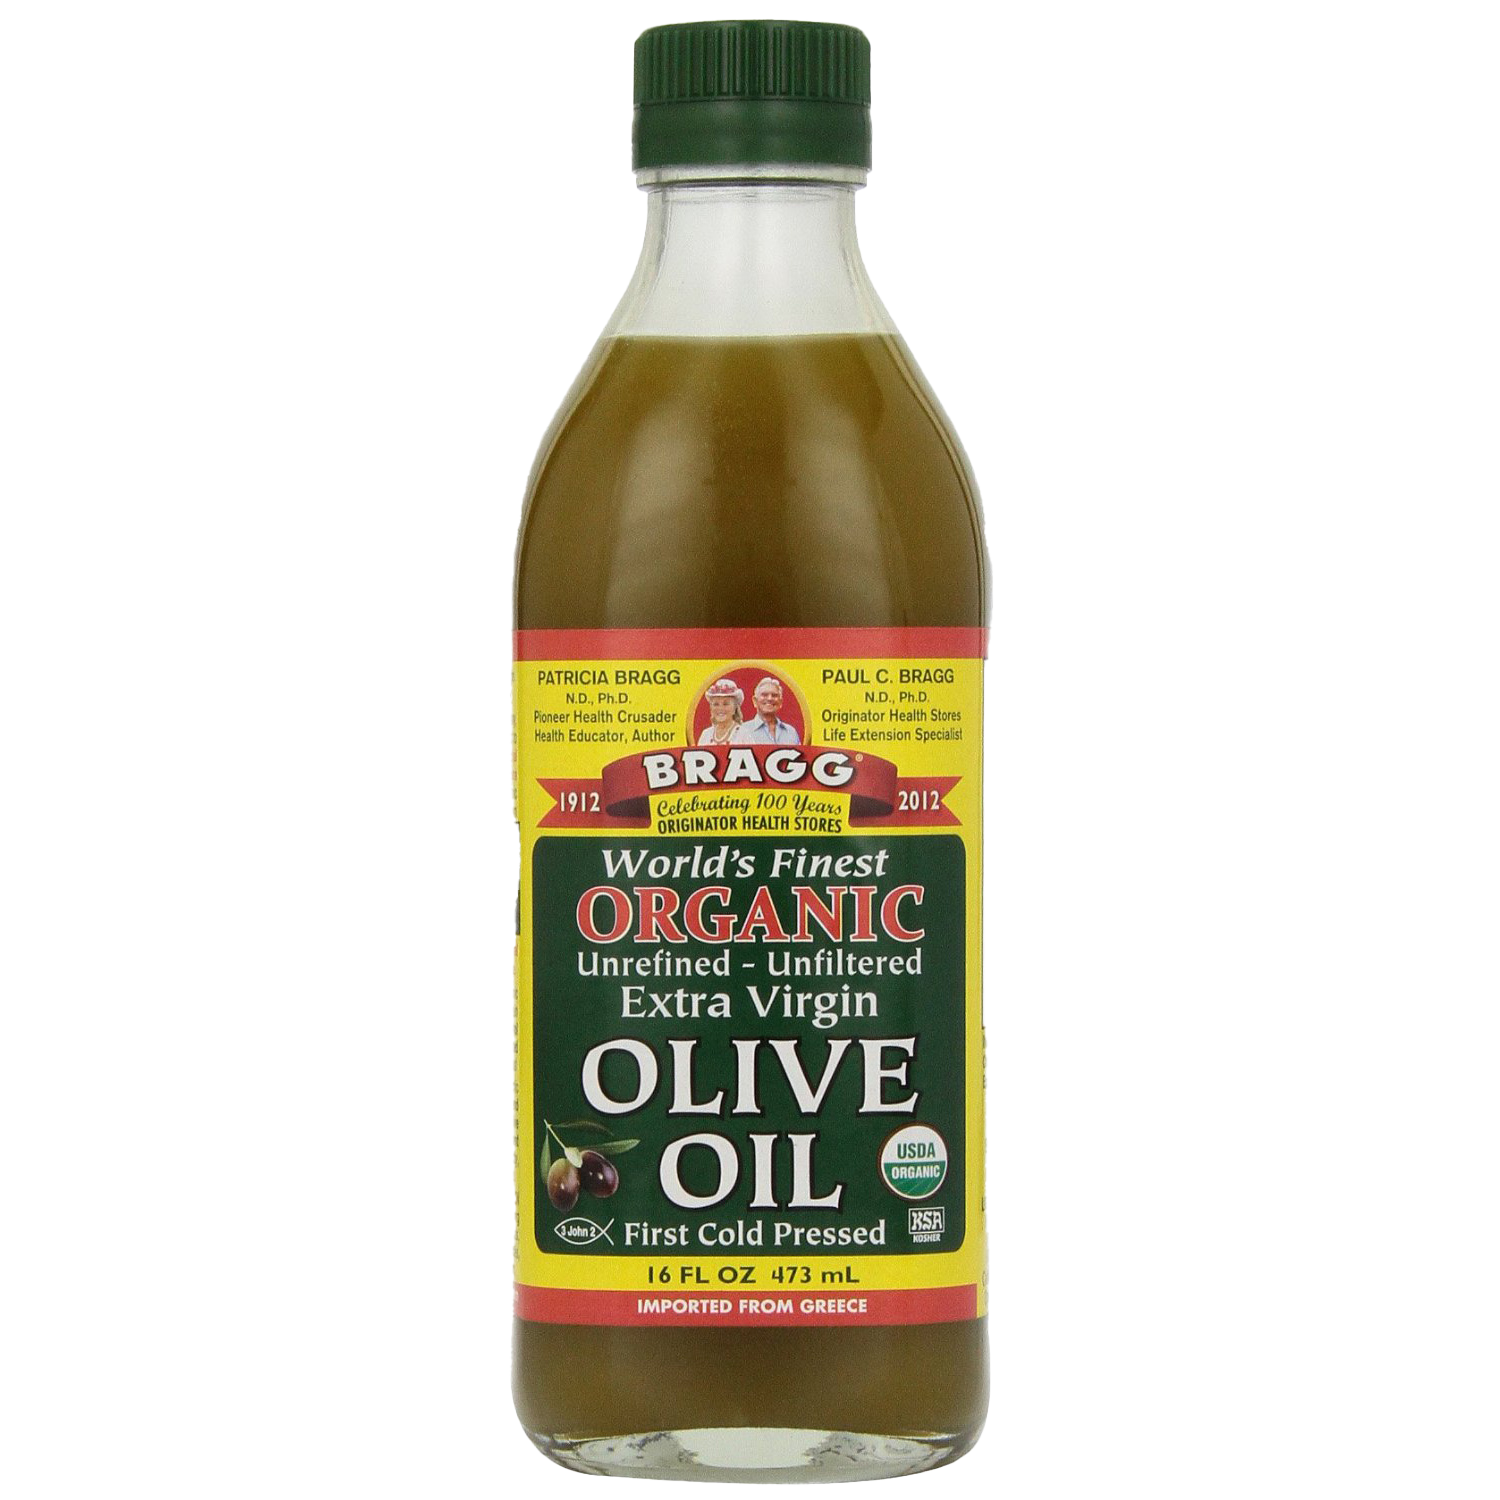 Метро оливковое масло. Зеленое оливковое масло. Копченое оливковое масло. Unrefined Olive Oil. Турецкое оливковое масло.